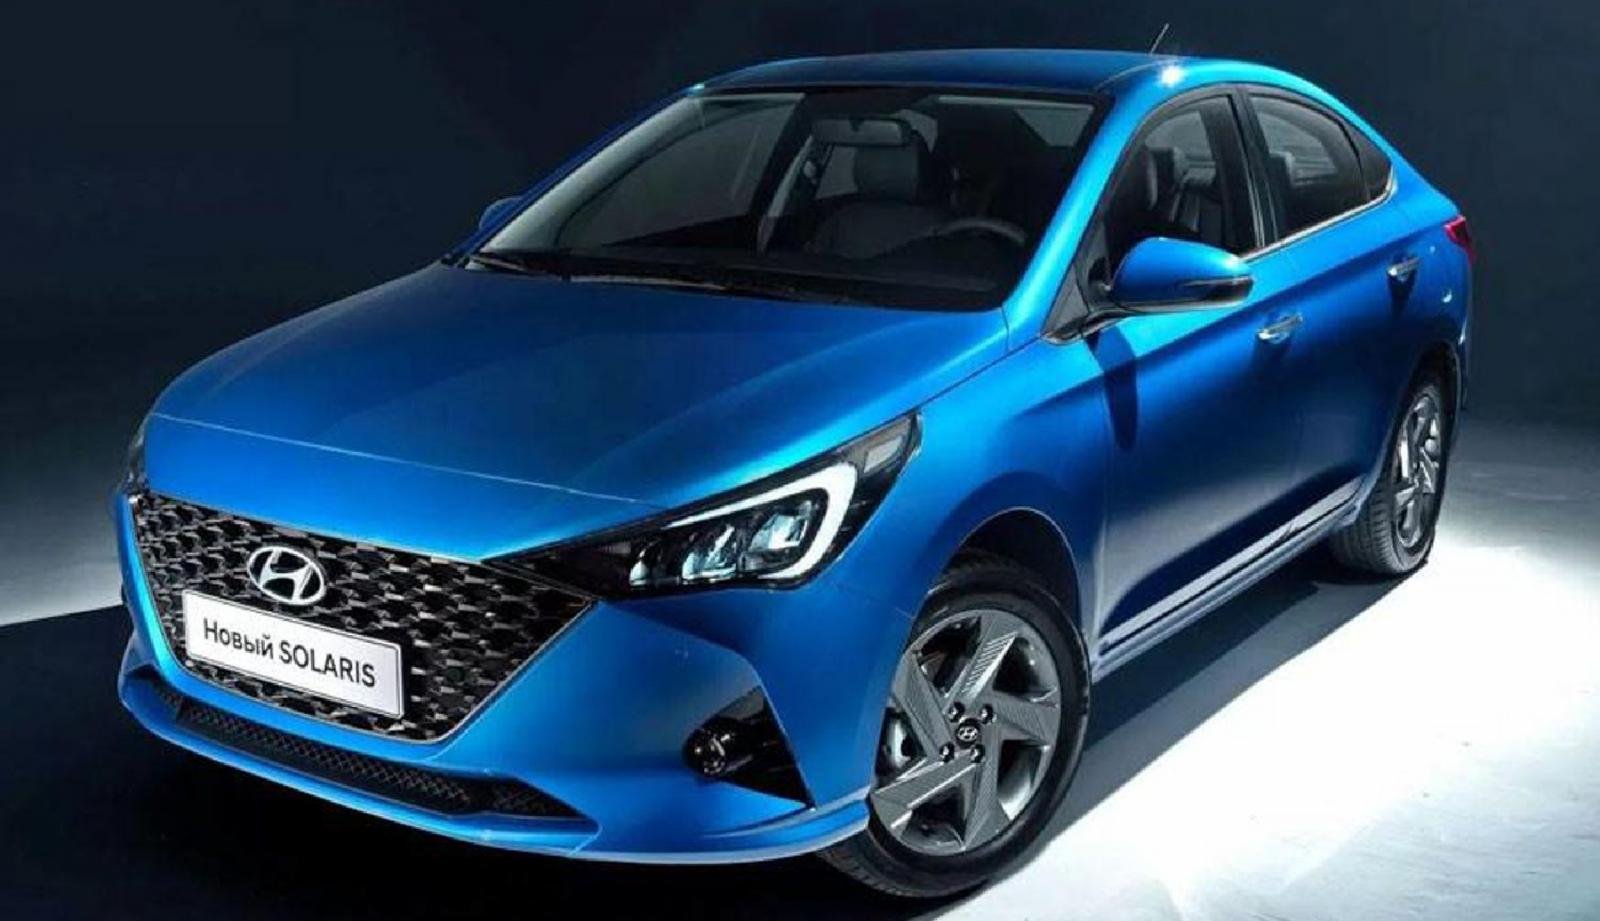 2020 Hyundai Verna facelift India